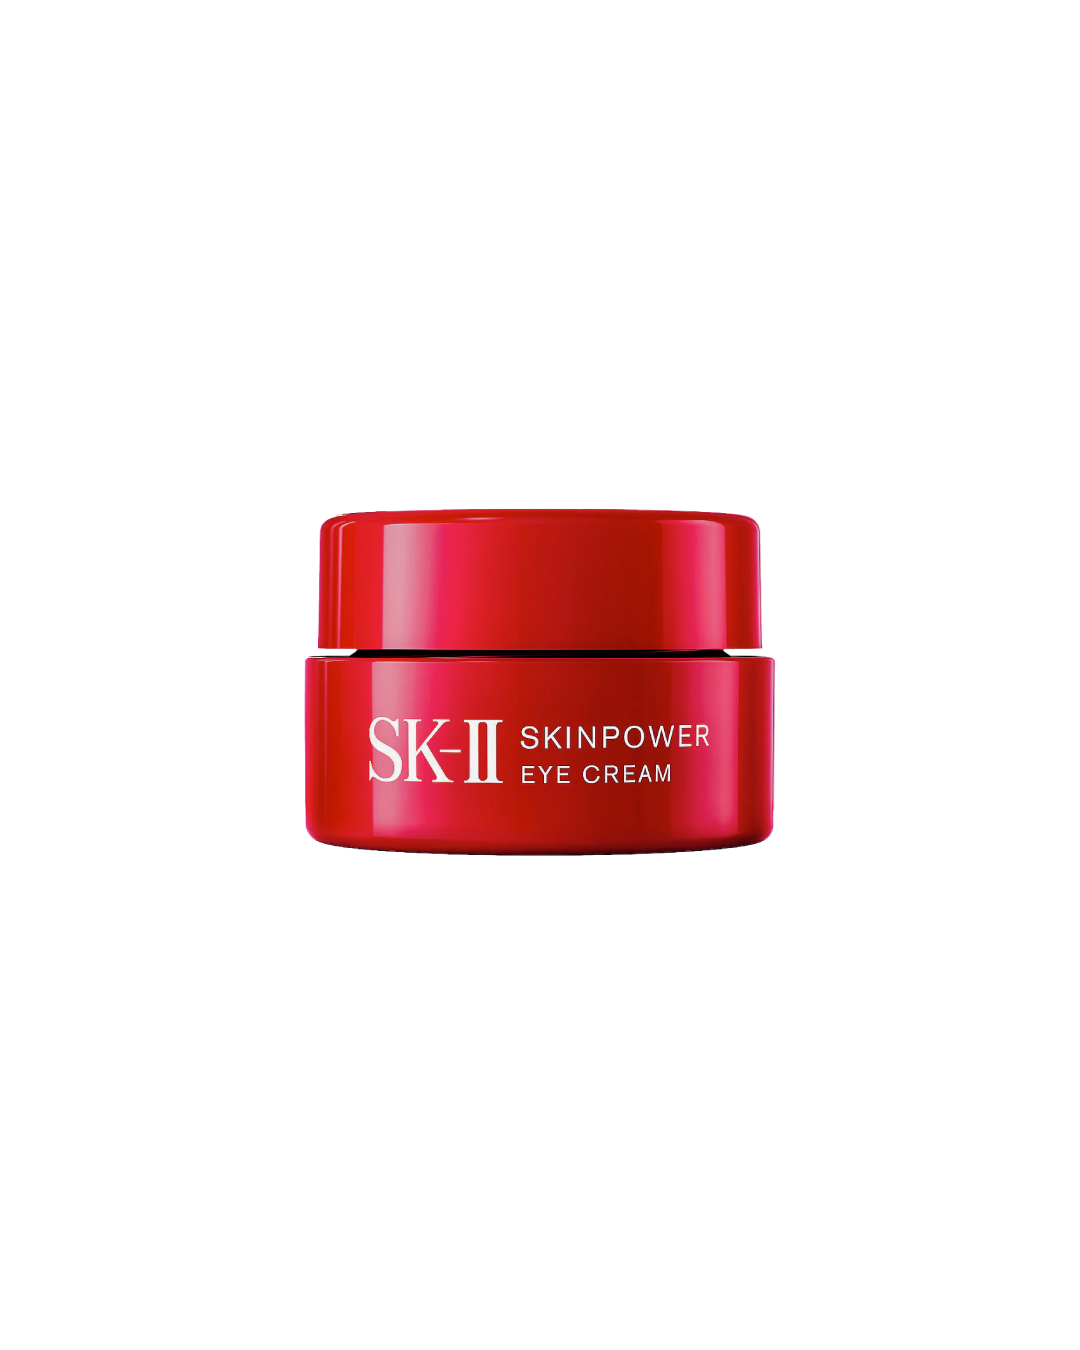 SK-II Skinpower Eye Cream (2.5g) - Best Buy World Philippines